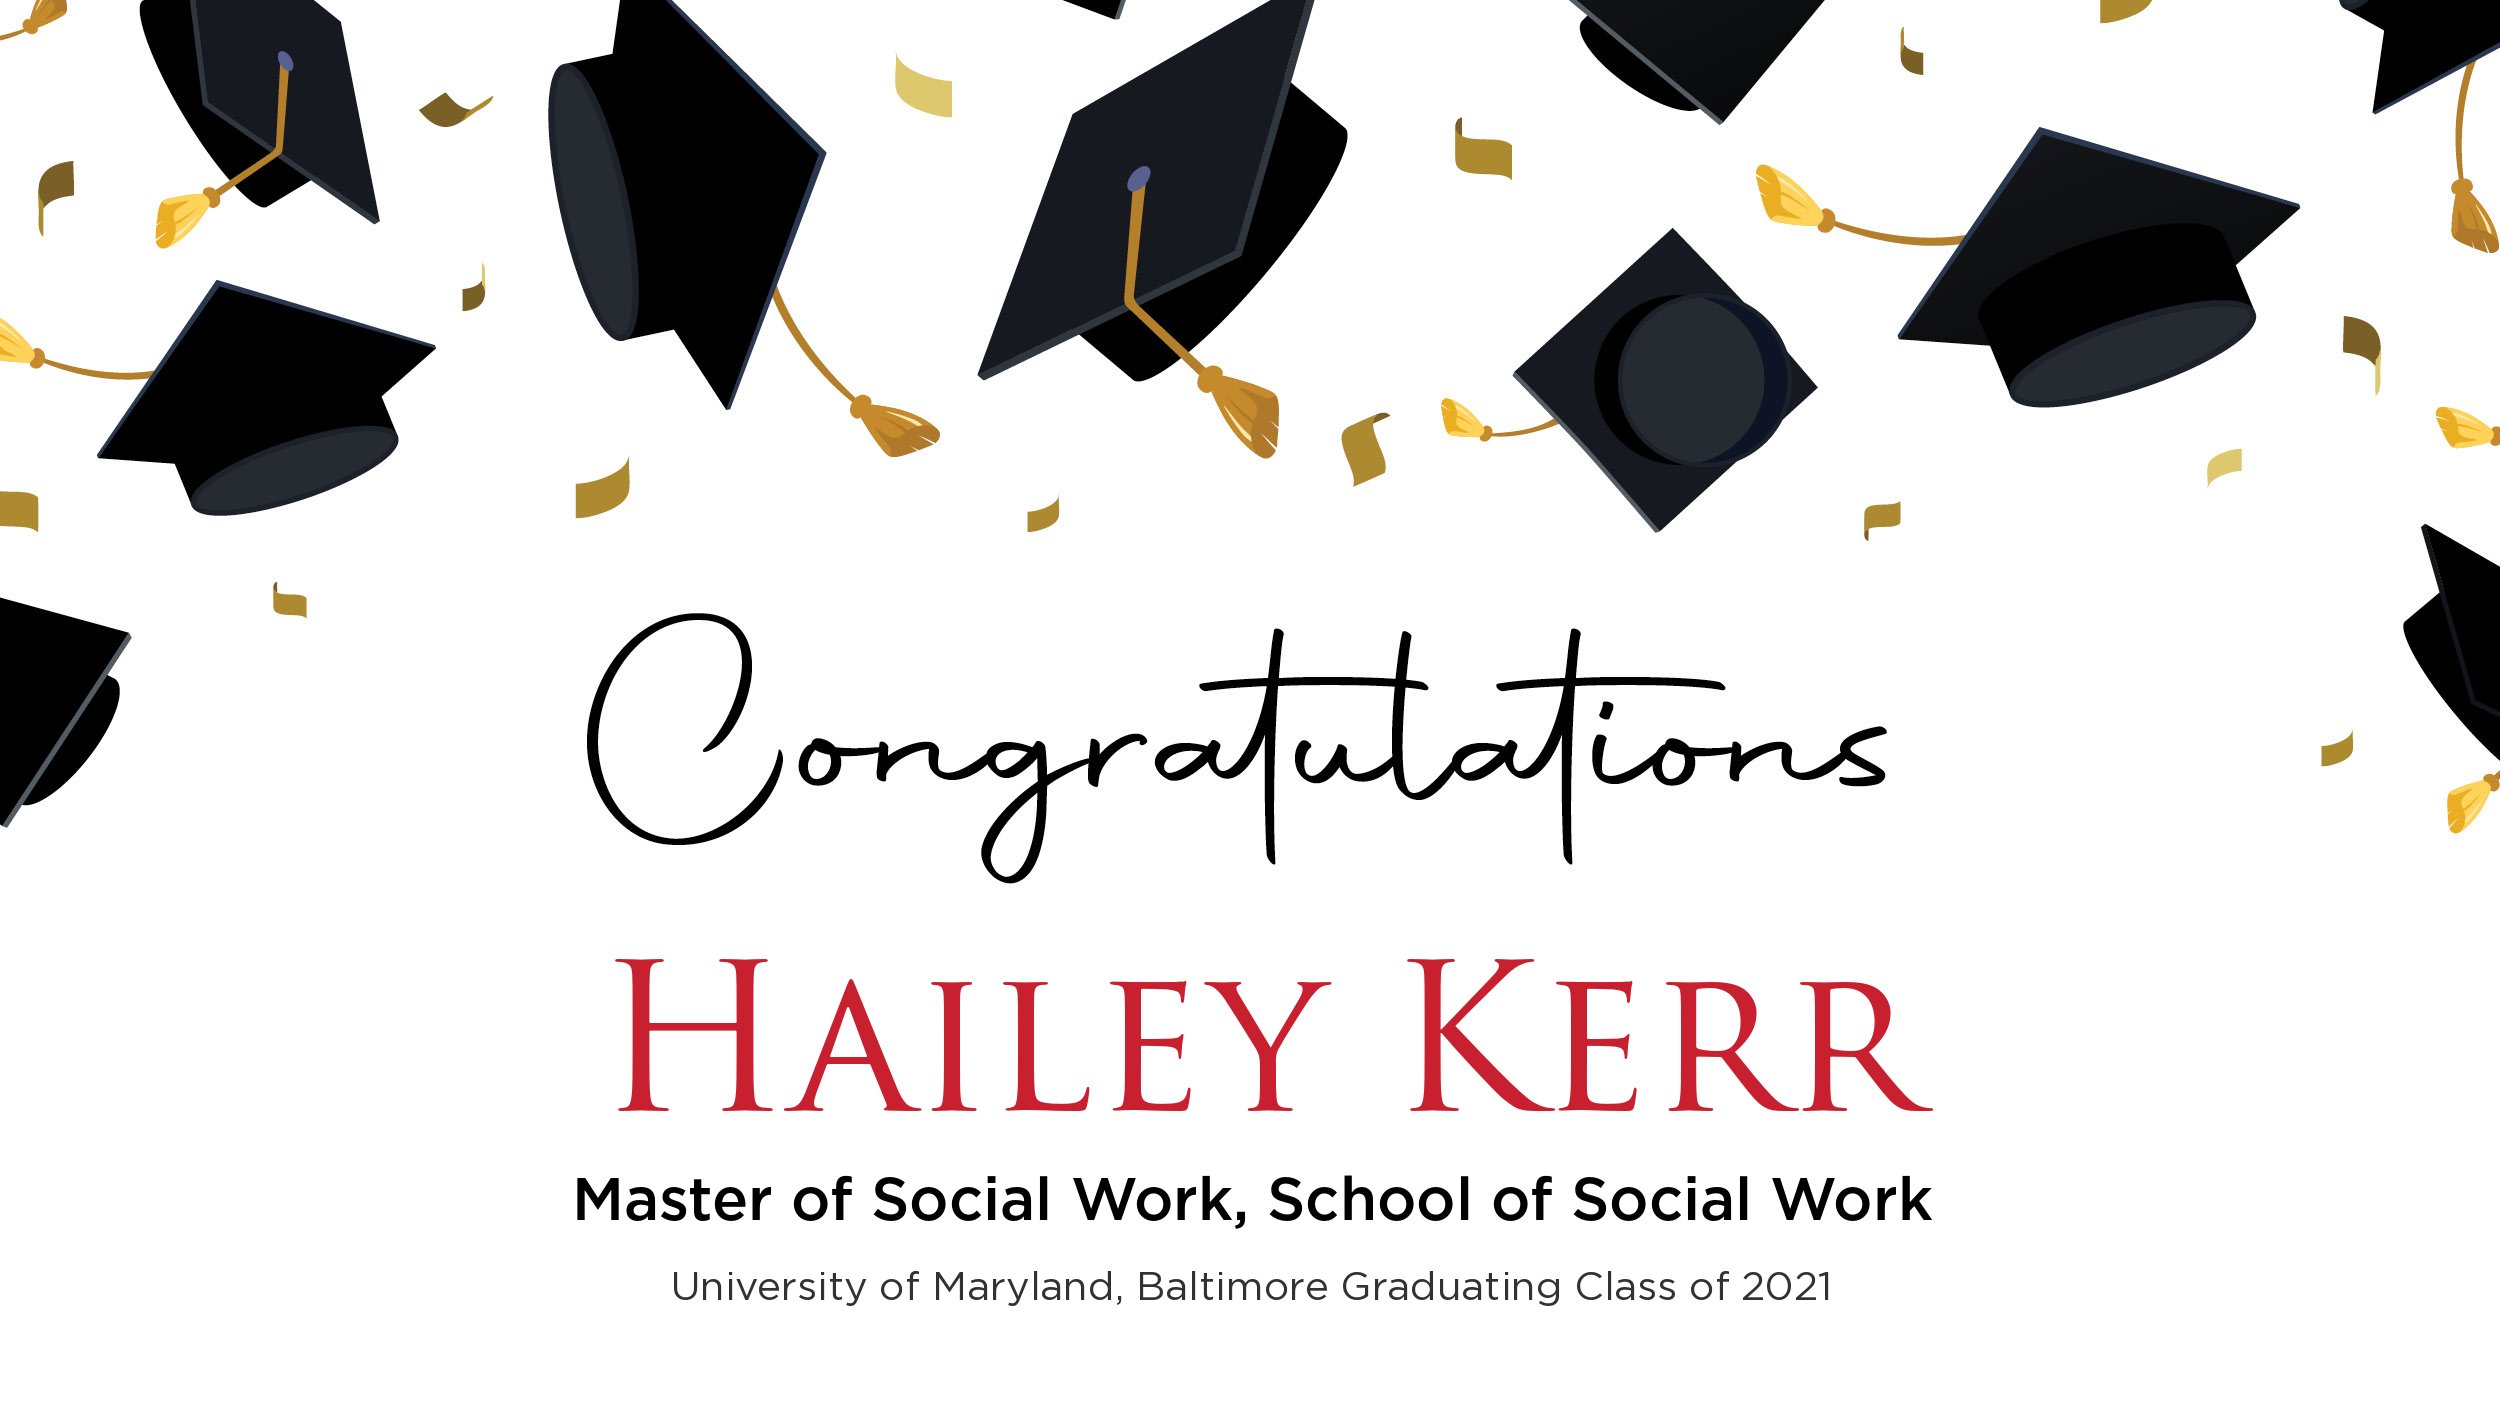 Congratulations Hailey Kerr, Master of Social Work